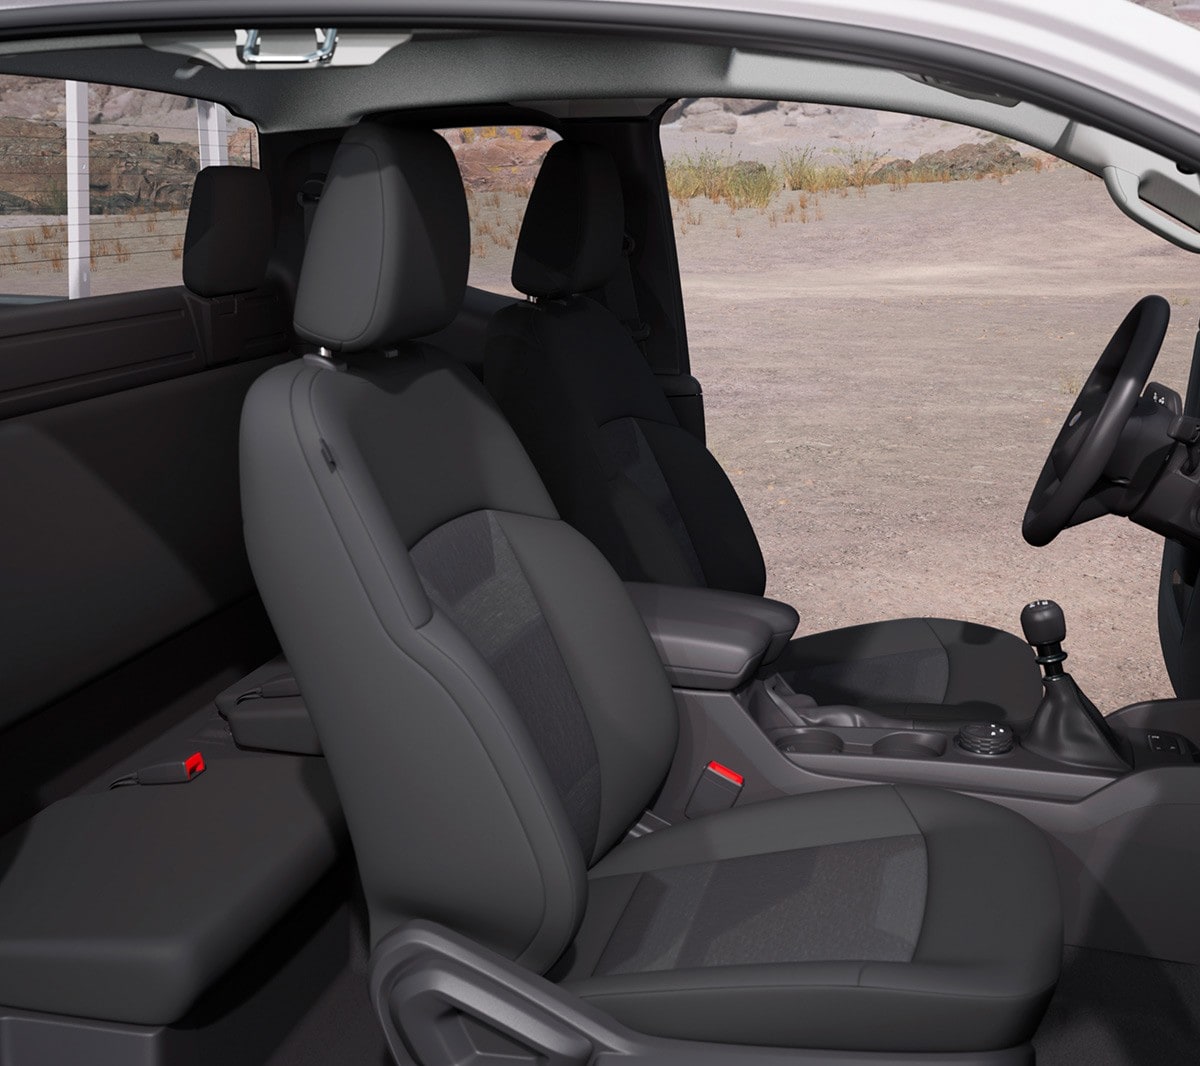 Ford Ranger Innenraum. Extrakabine, Detailansicht Rücksitzbank